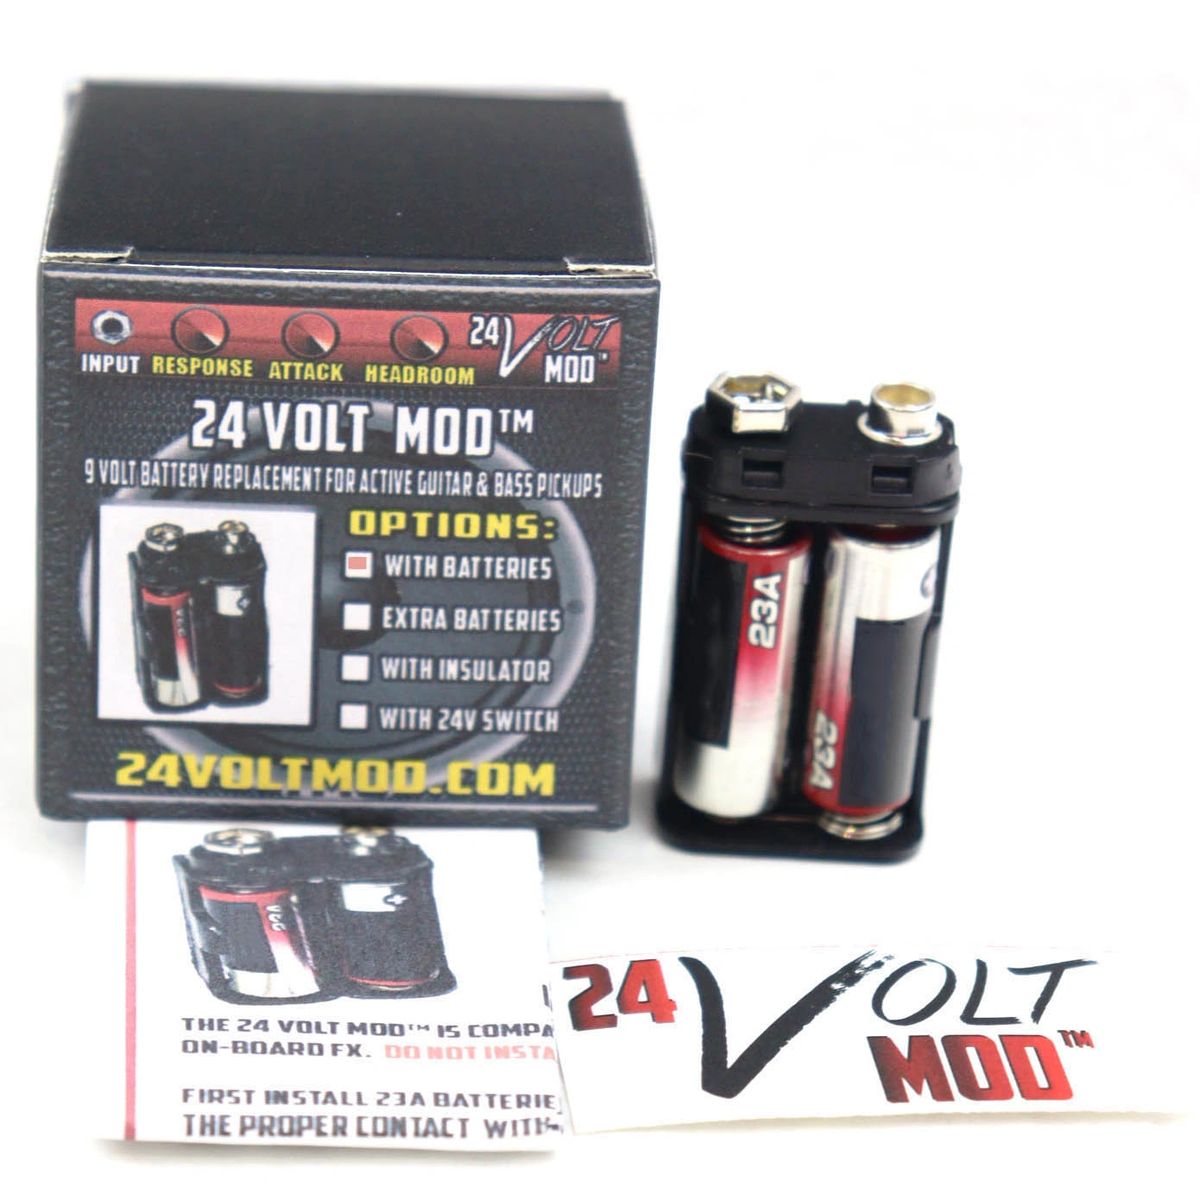 ✓ 24 Volt Mod™ The original 9 Volt Battery Replacement for EMG & MOST Active